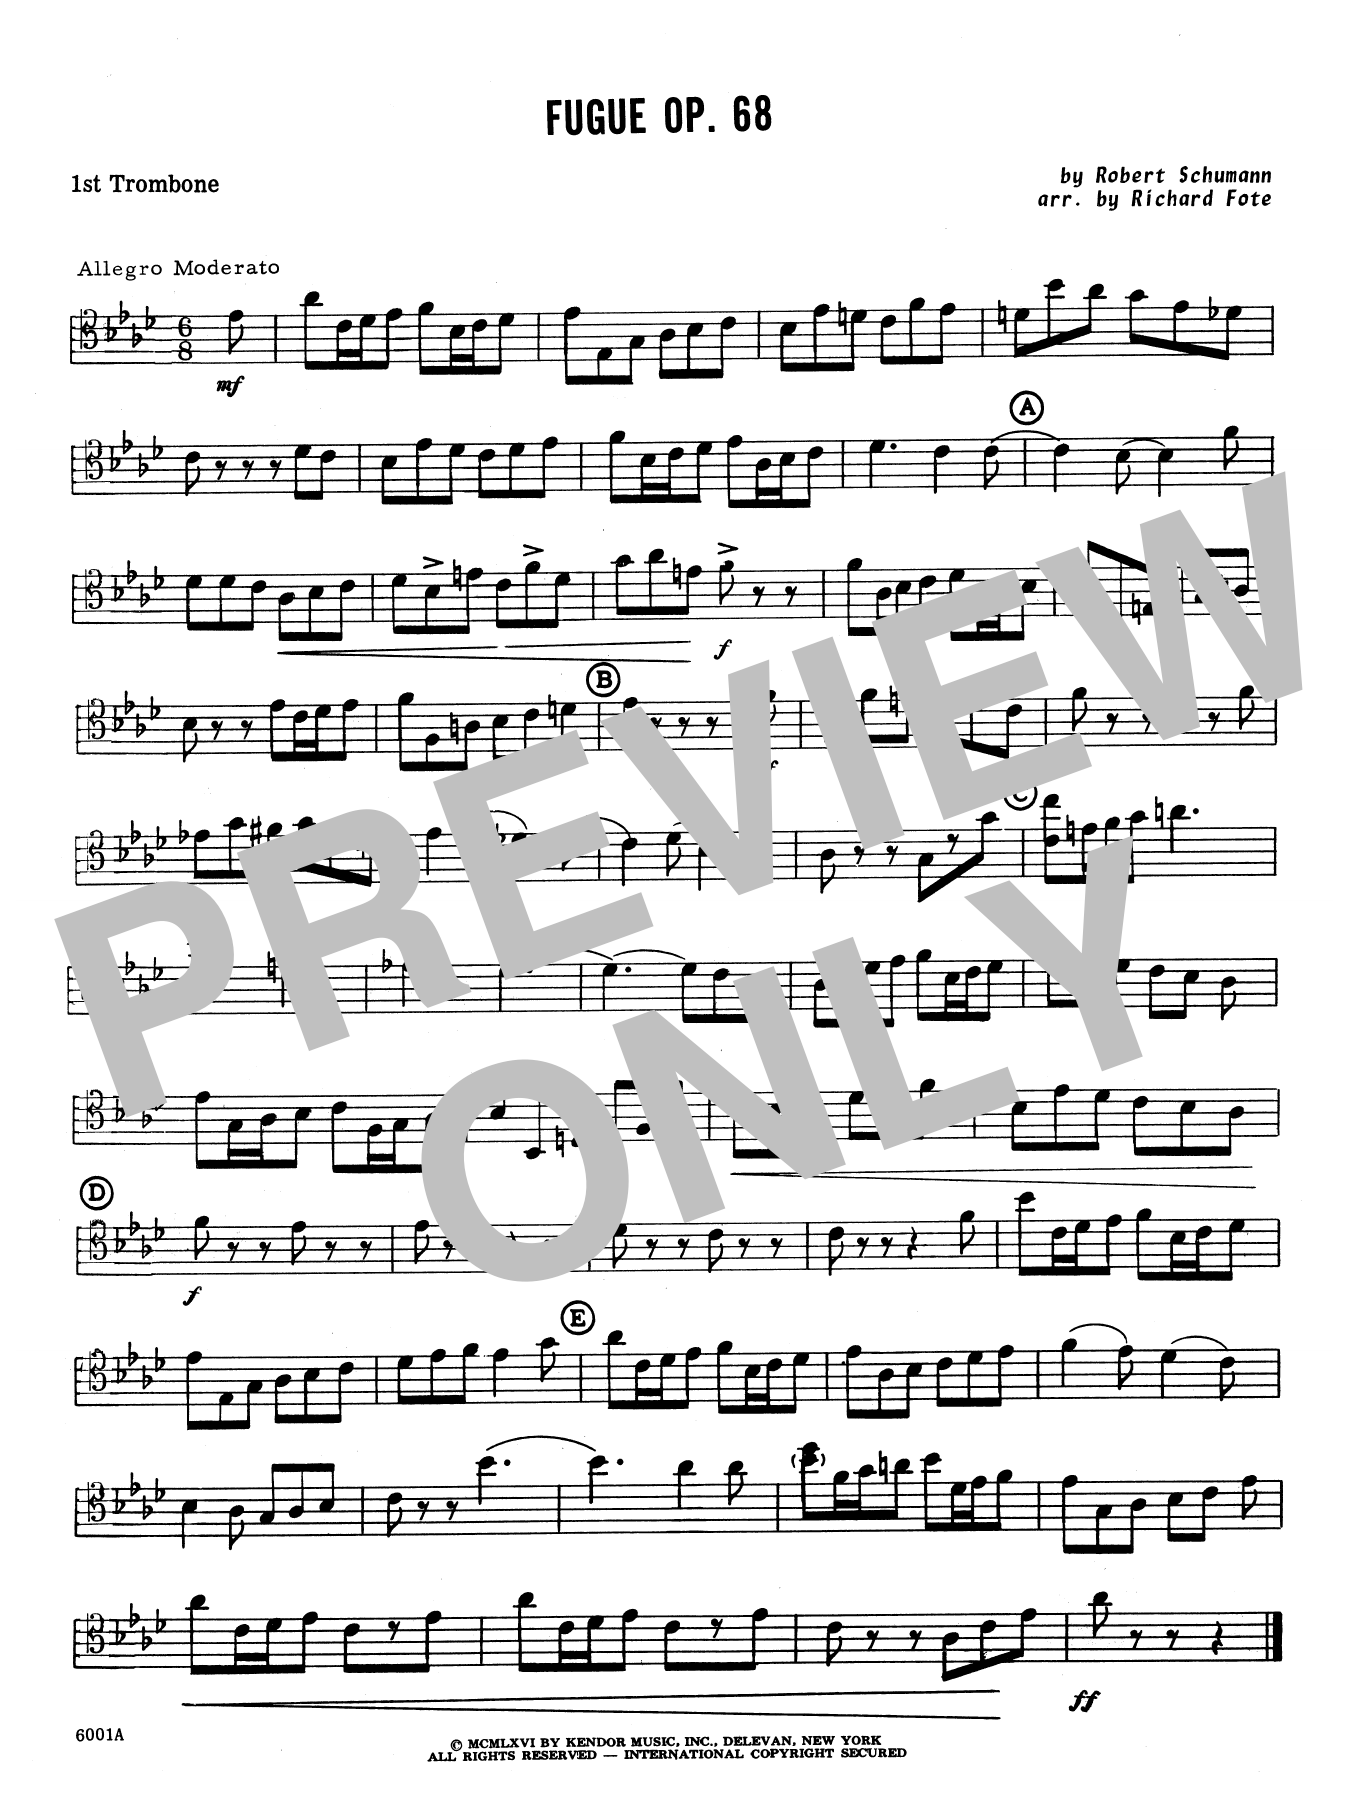 Download Richard Fote Fugue/Opus 68 - 1st Trombone Sheet Music